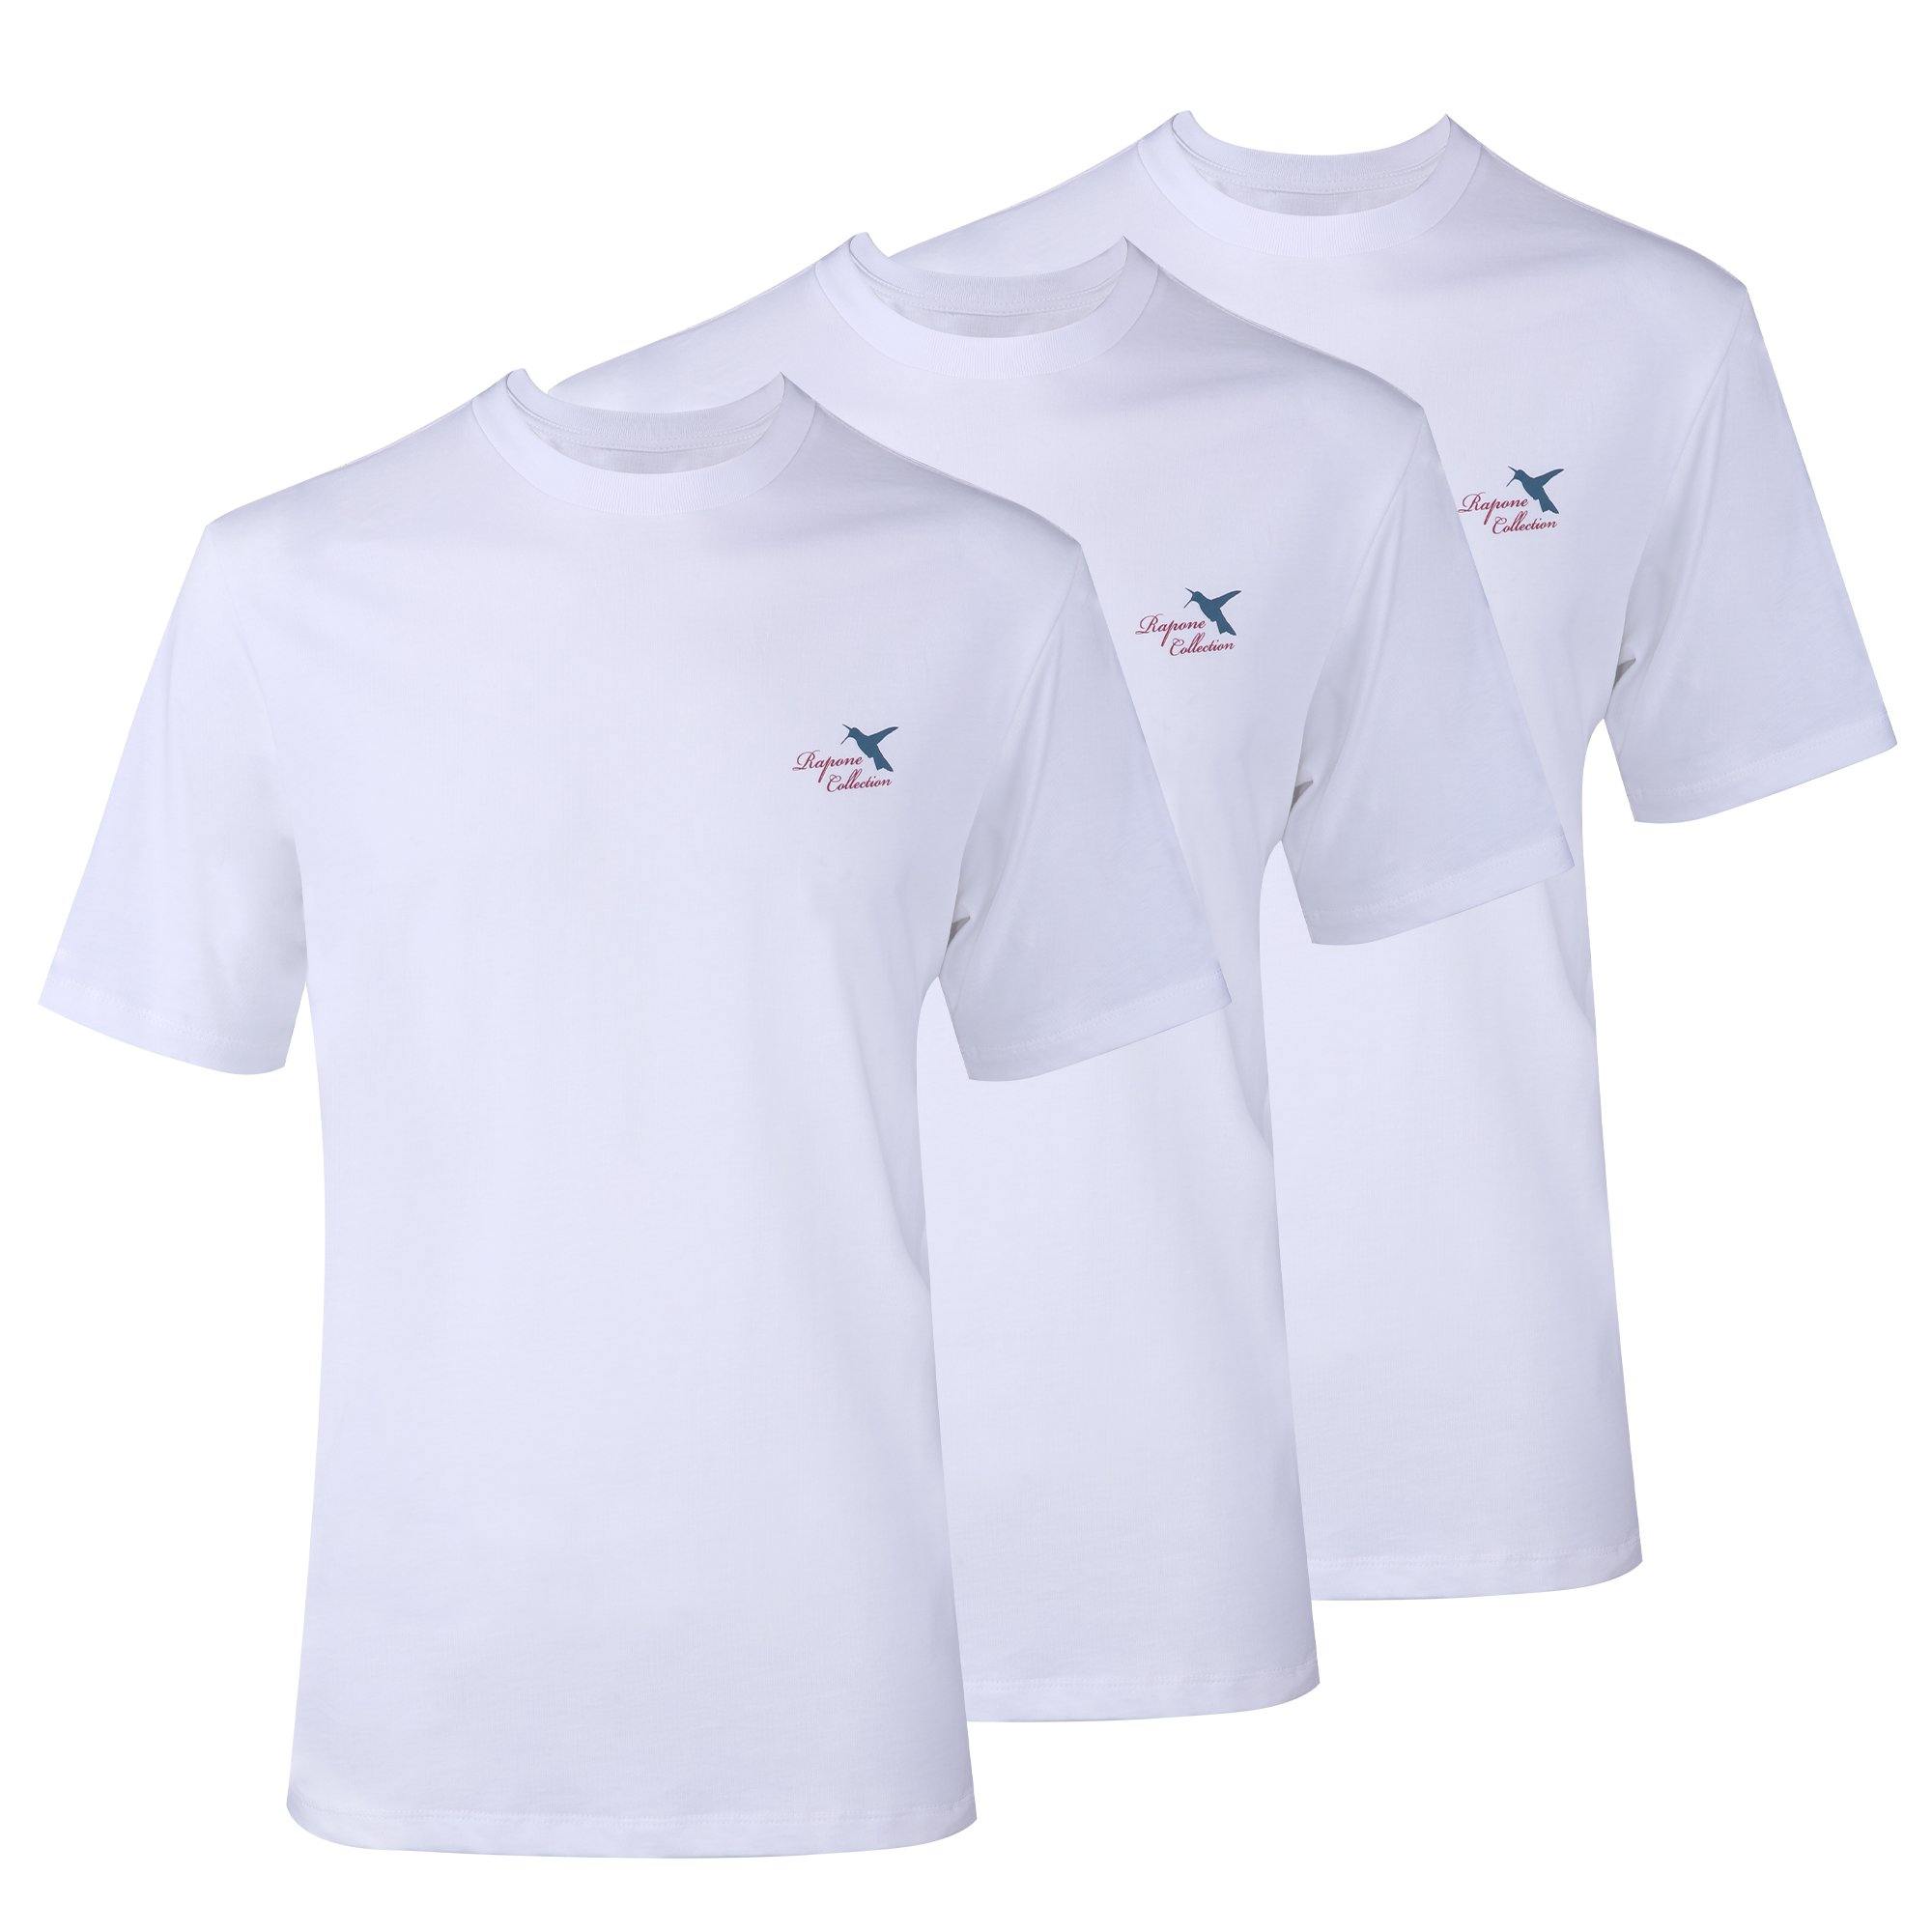 3-Pack Crew Classic T-Shirt Cotton Short Sleeve Shirts Summer Tops - Bosonshop